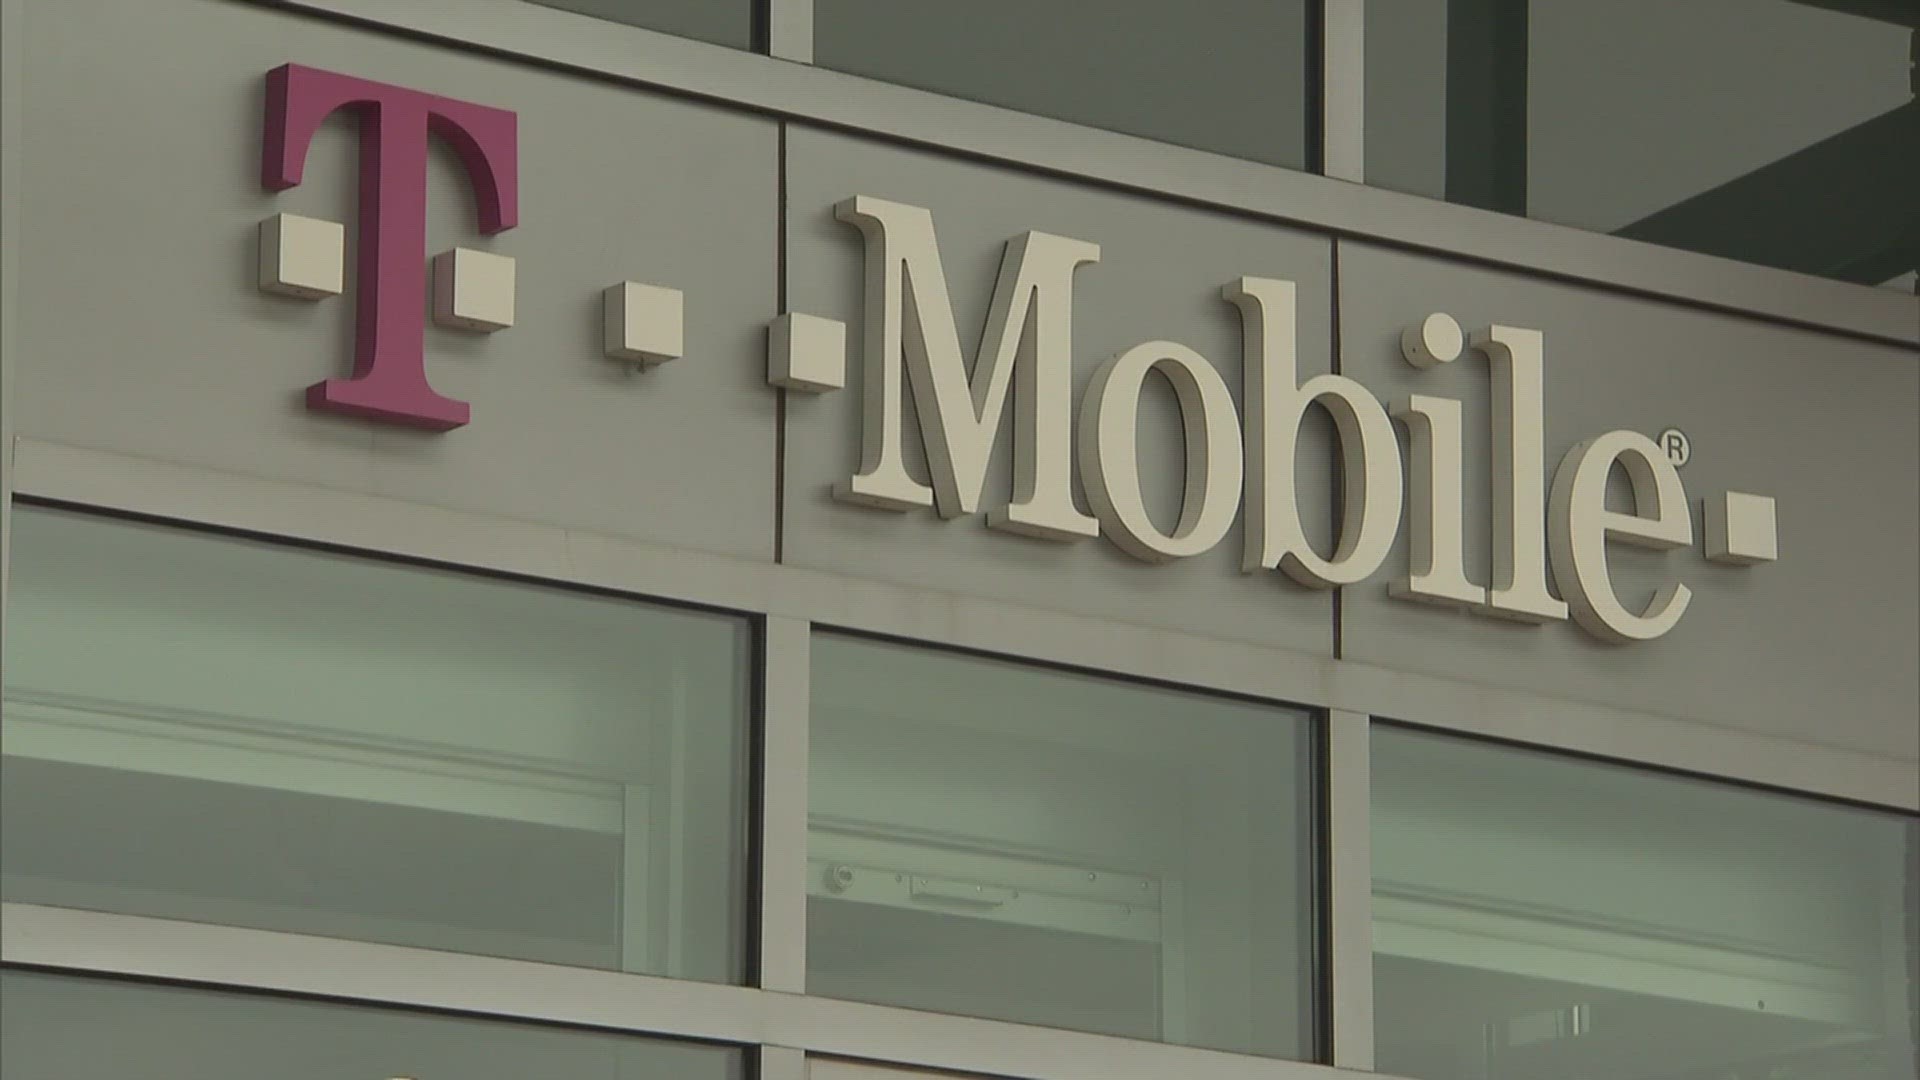 T-Mobile's corporate headquarters are located in Bellevue.